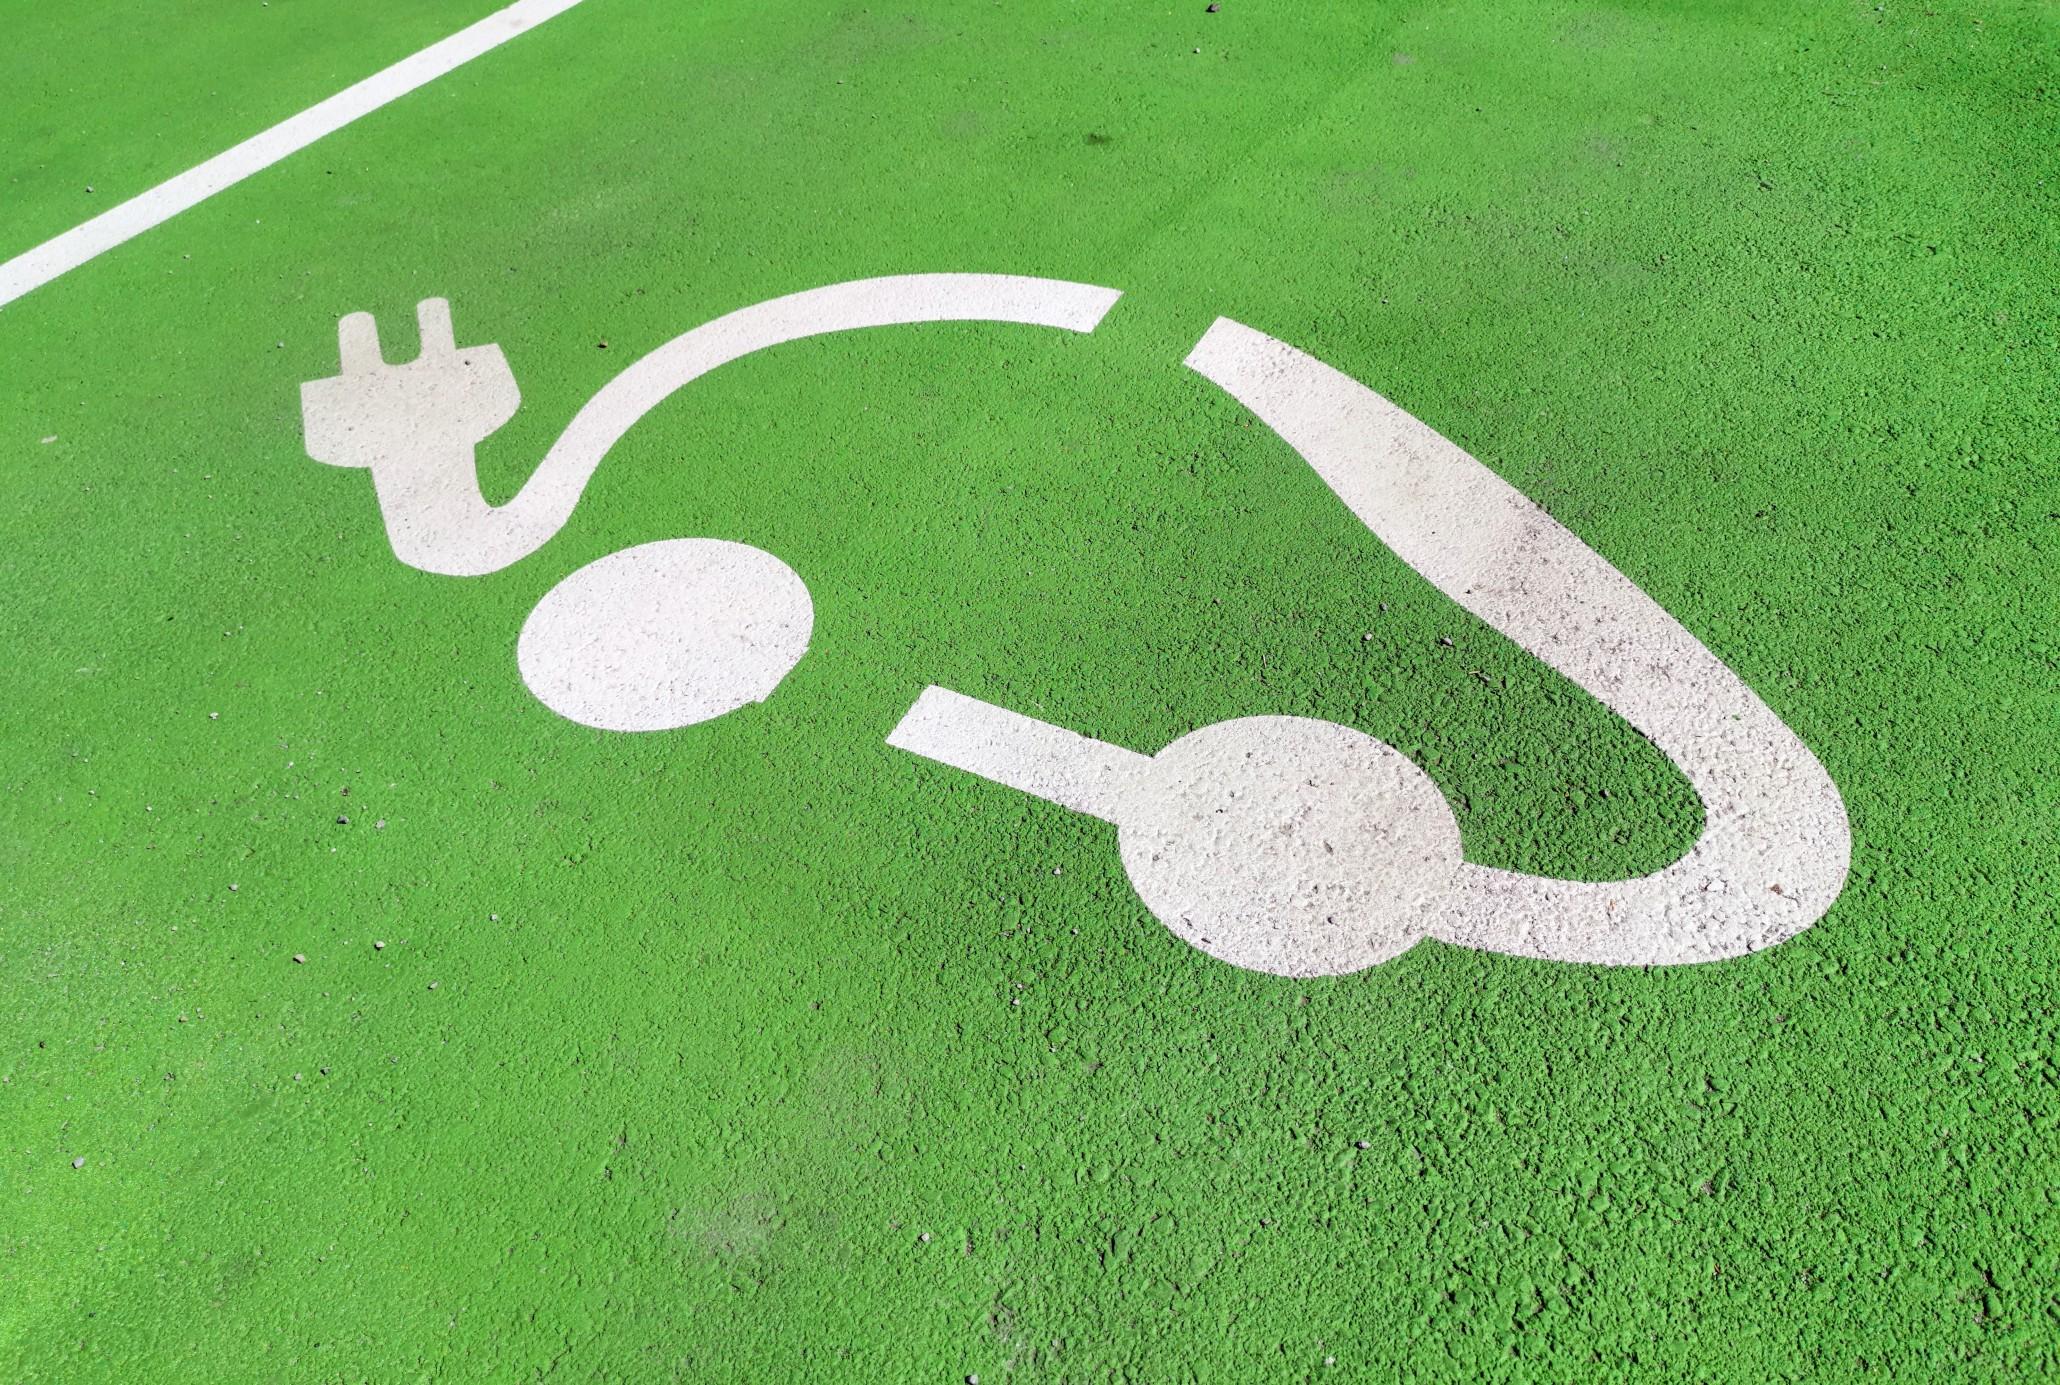 EV charging mark on ground